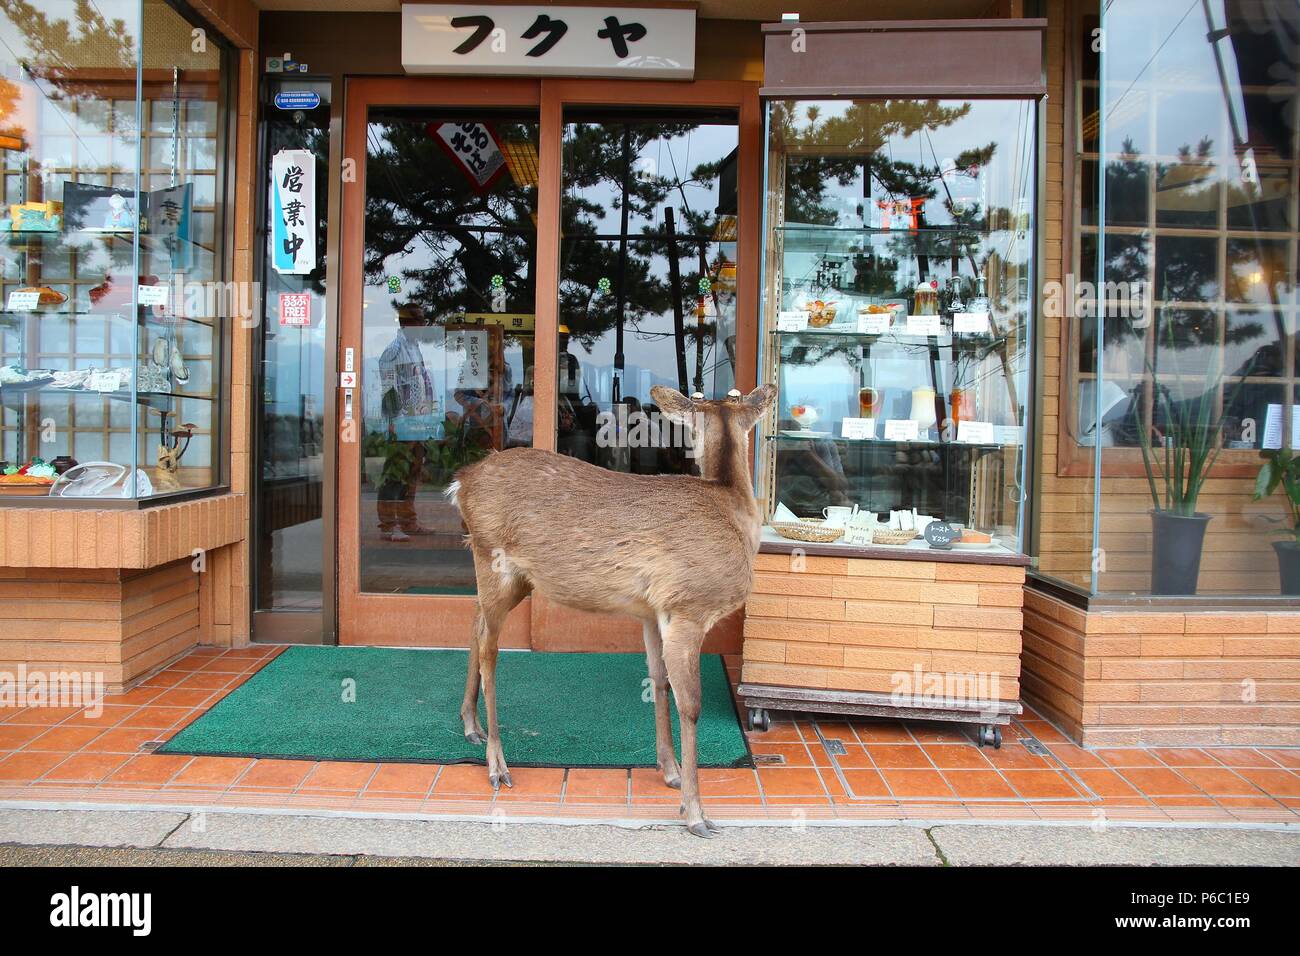 MIYAJIMA, JAPAN - APRIL 21, 2012: Tame deer in Miyajima island, Japan. Famous island shrine is a UNESCO World Heritage Site and a major tourism destin Stock Photo